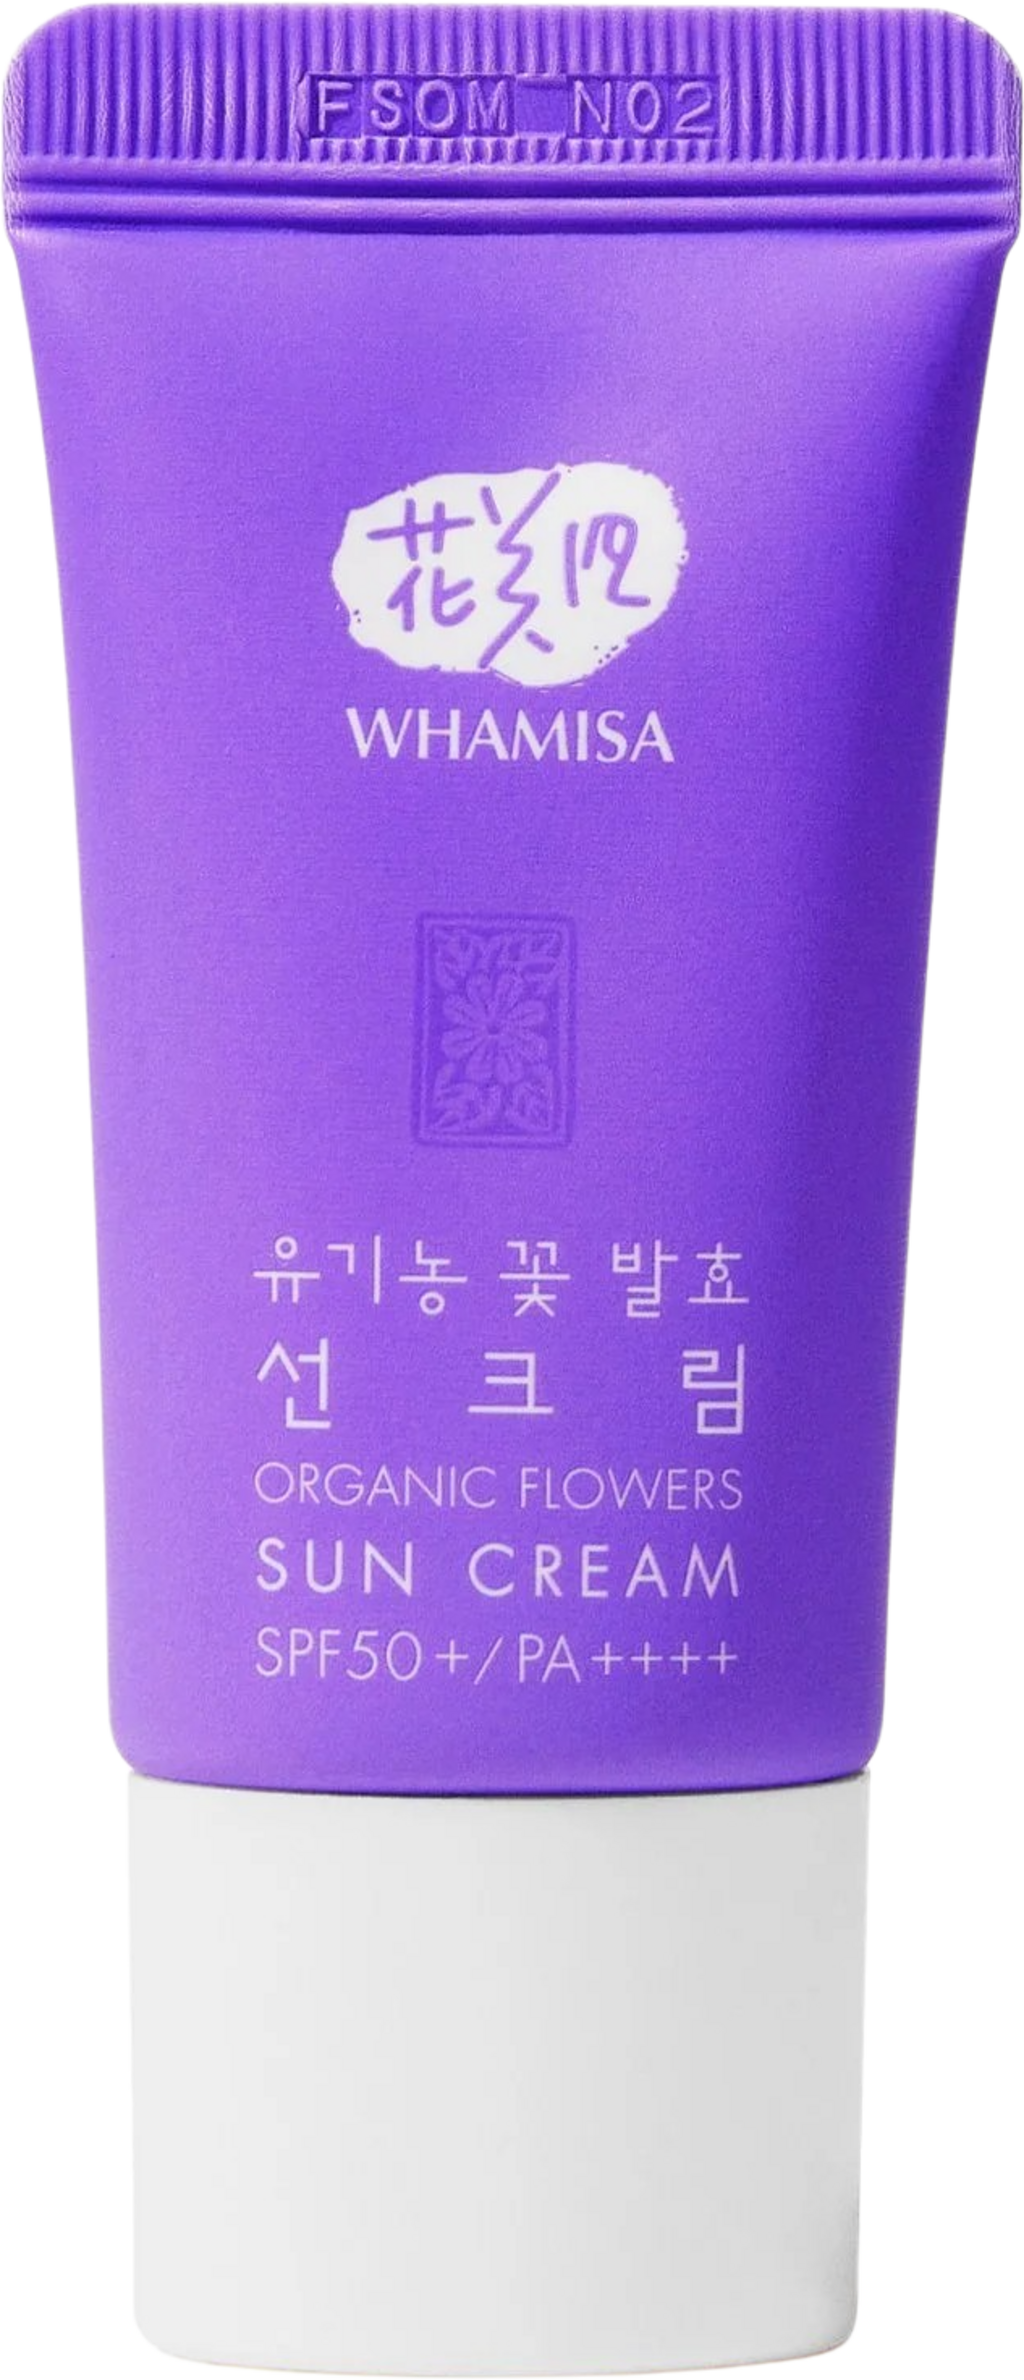 Whamisa Sun Cream SPF 50 - 10 g